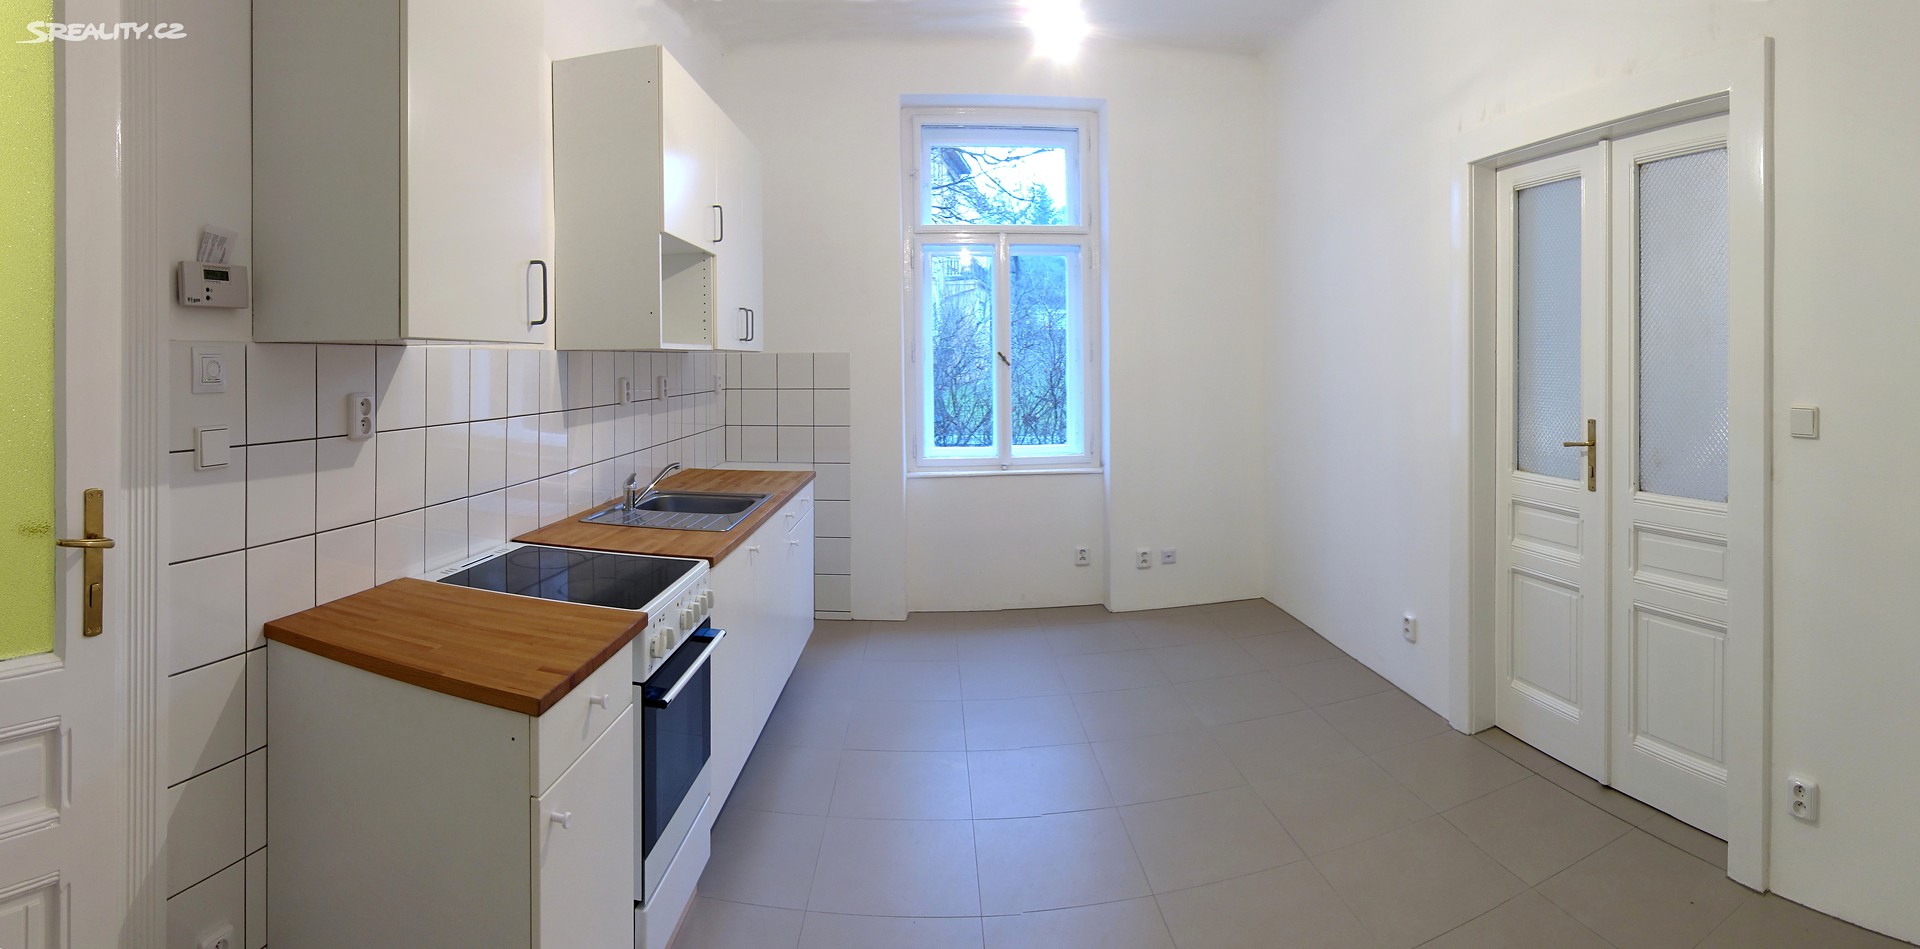 Pronájem bytu 1+1 43 m², U Mrázovky, Praha 5 - Smíchov